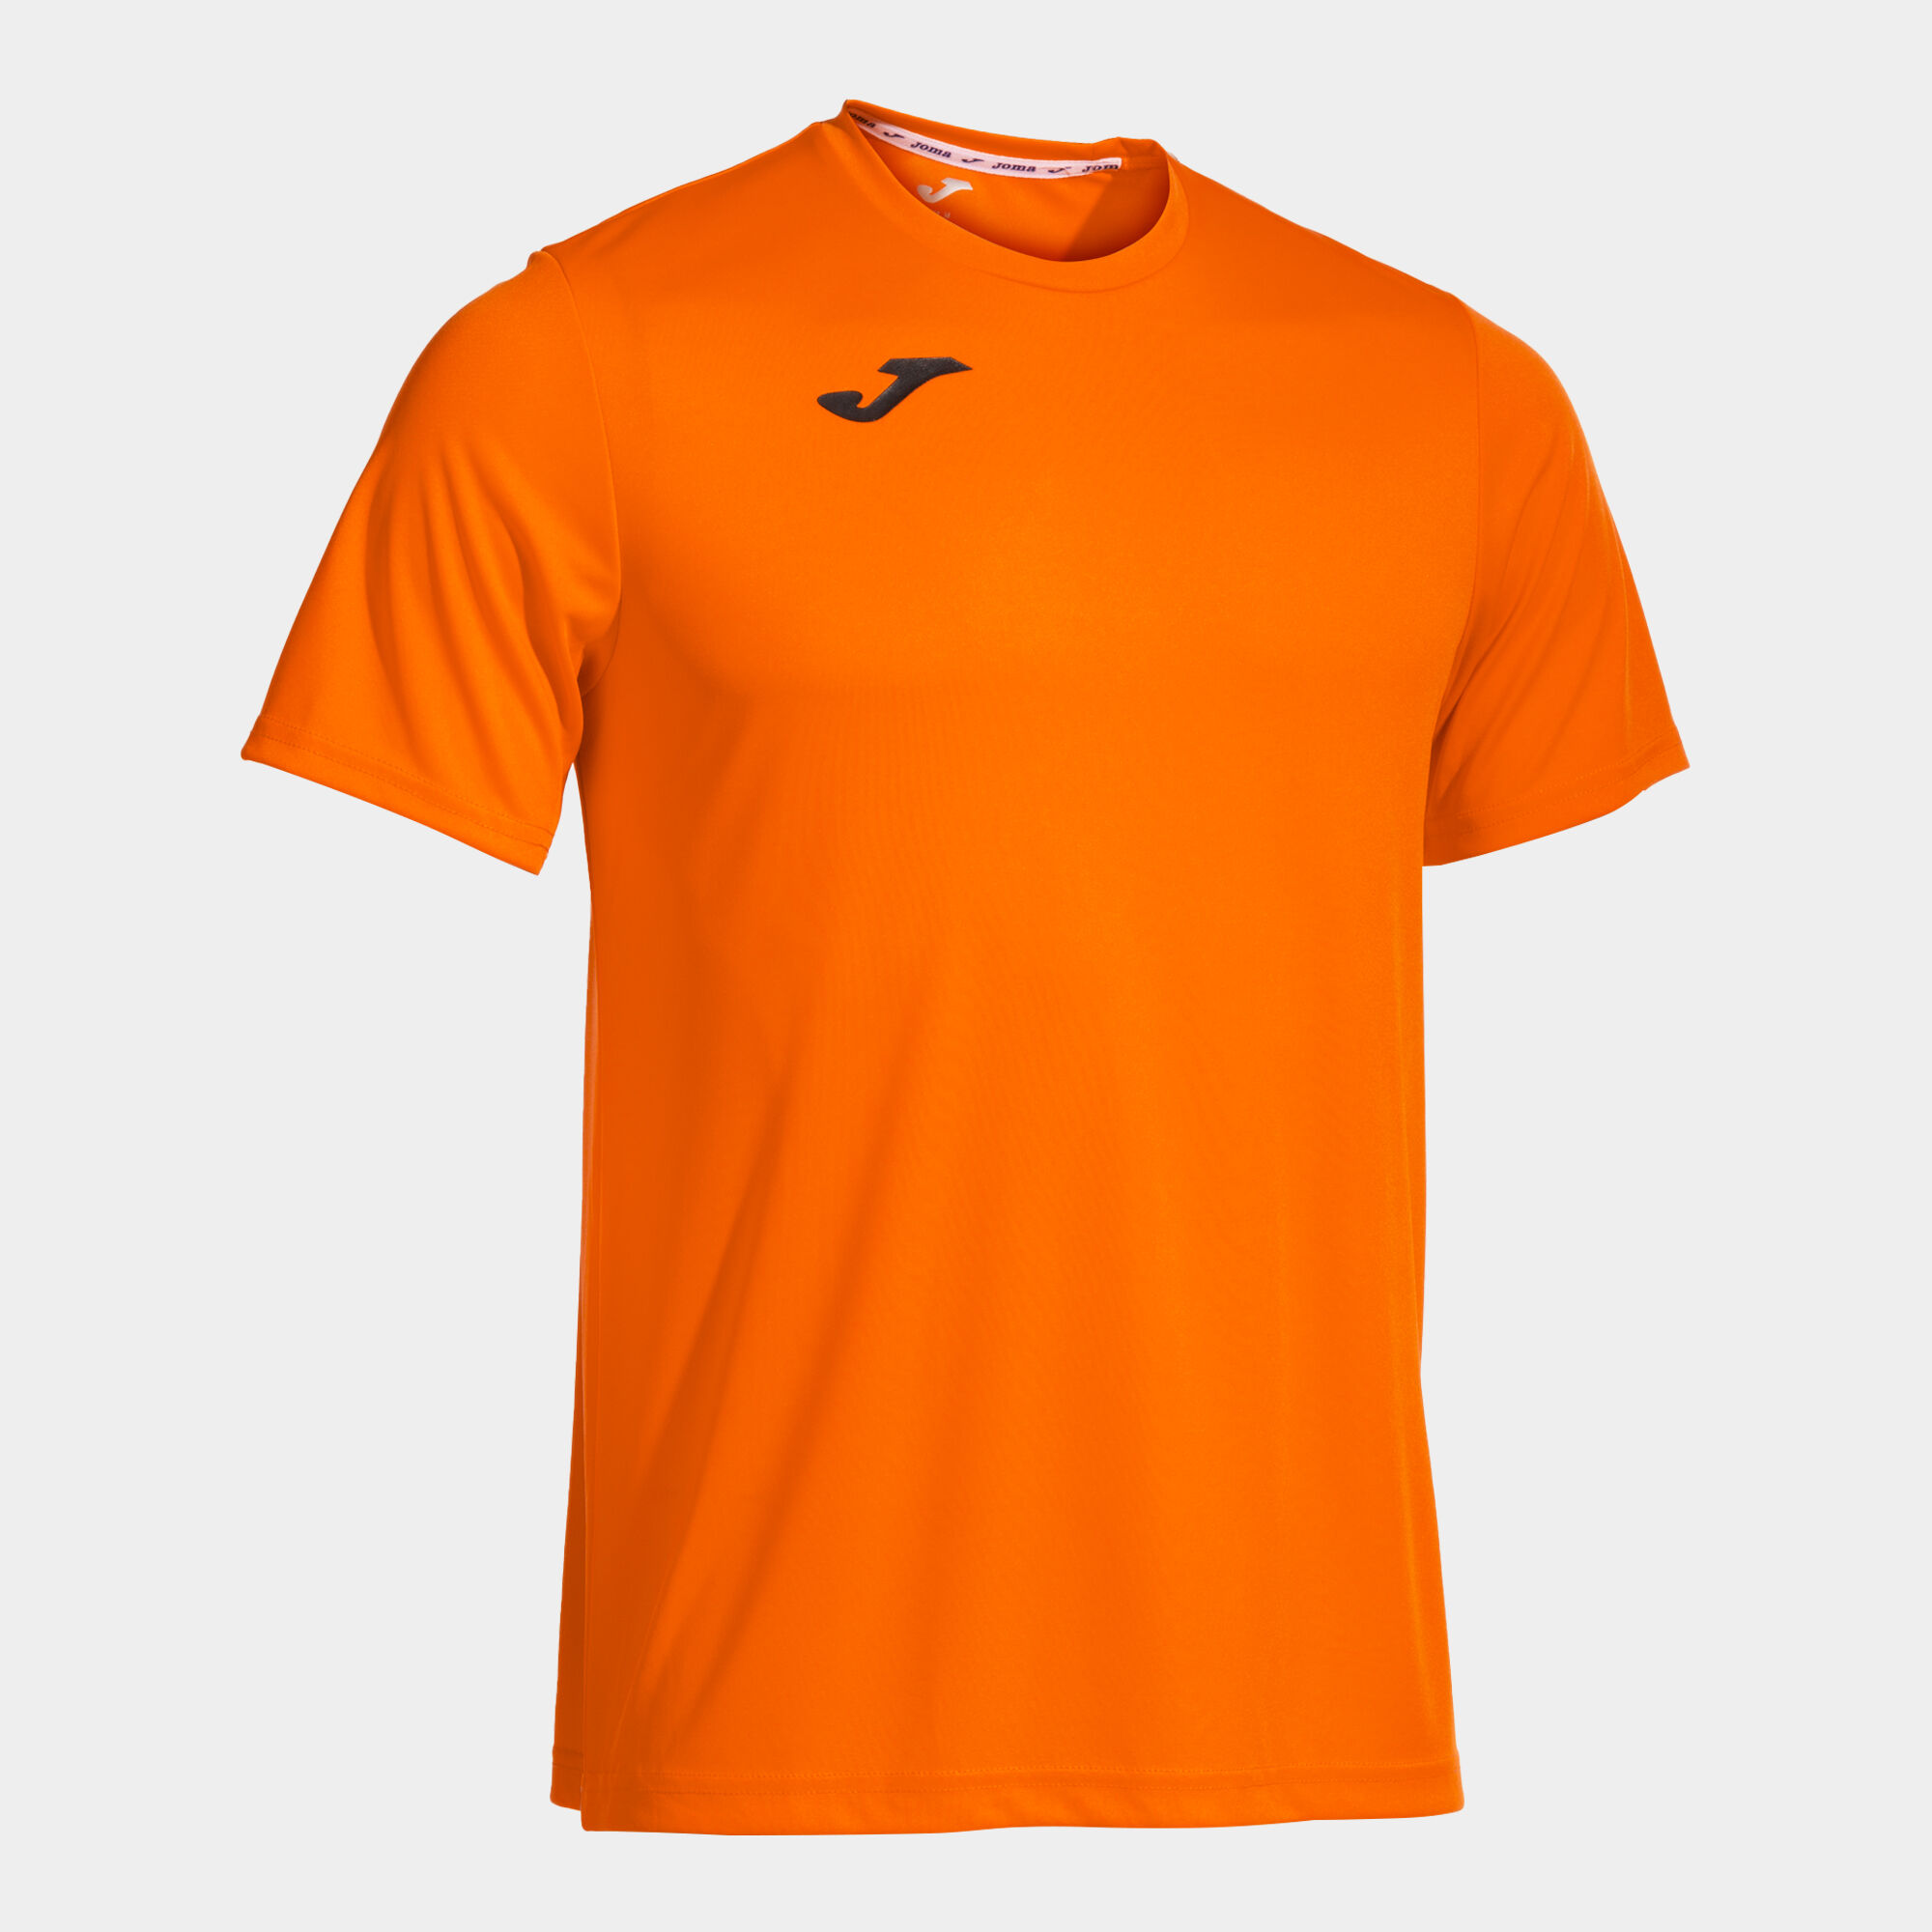 Shirt short sleeve man Combi orange